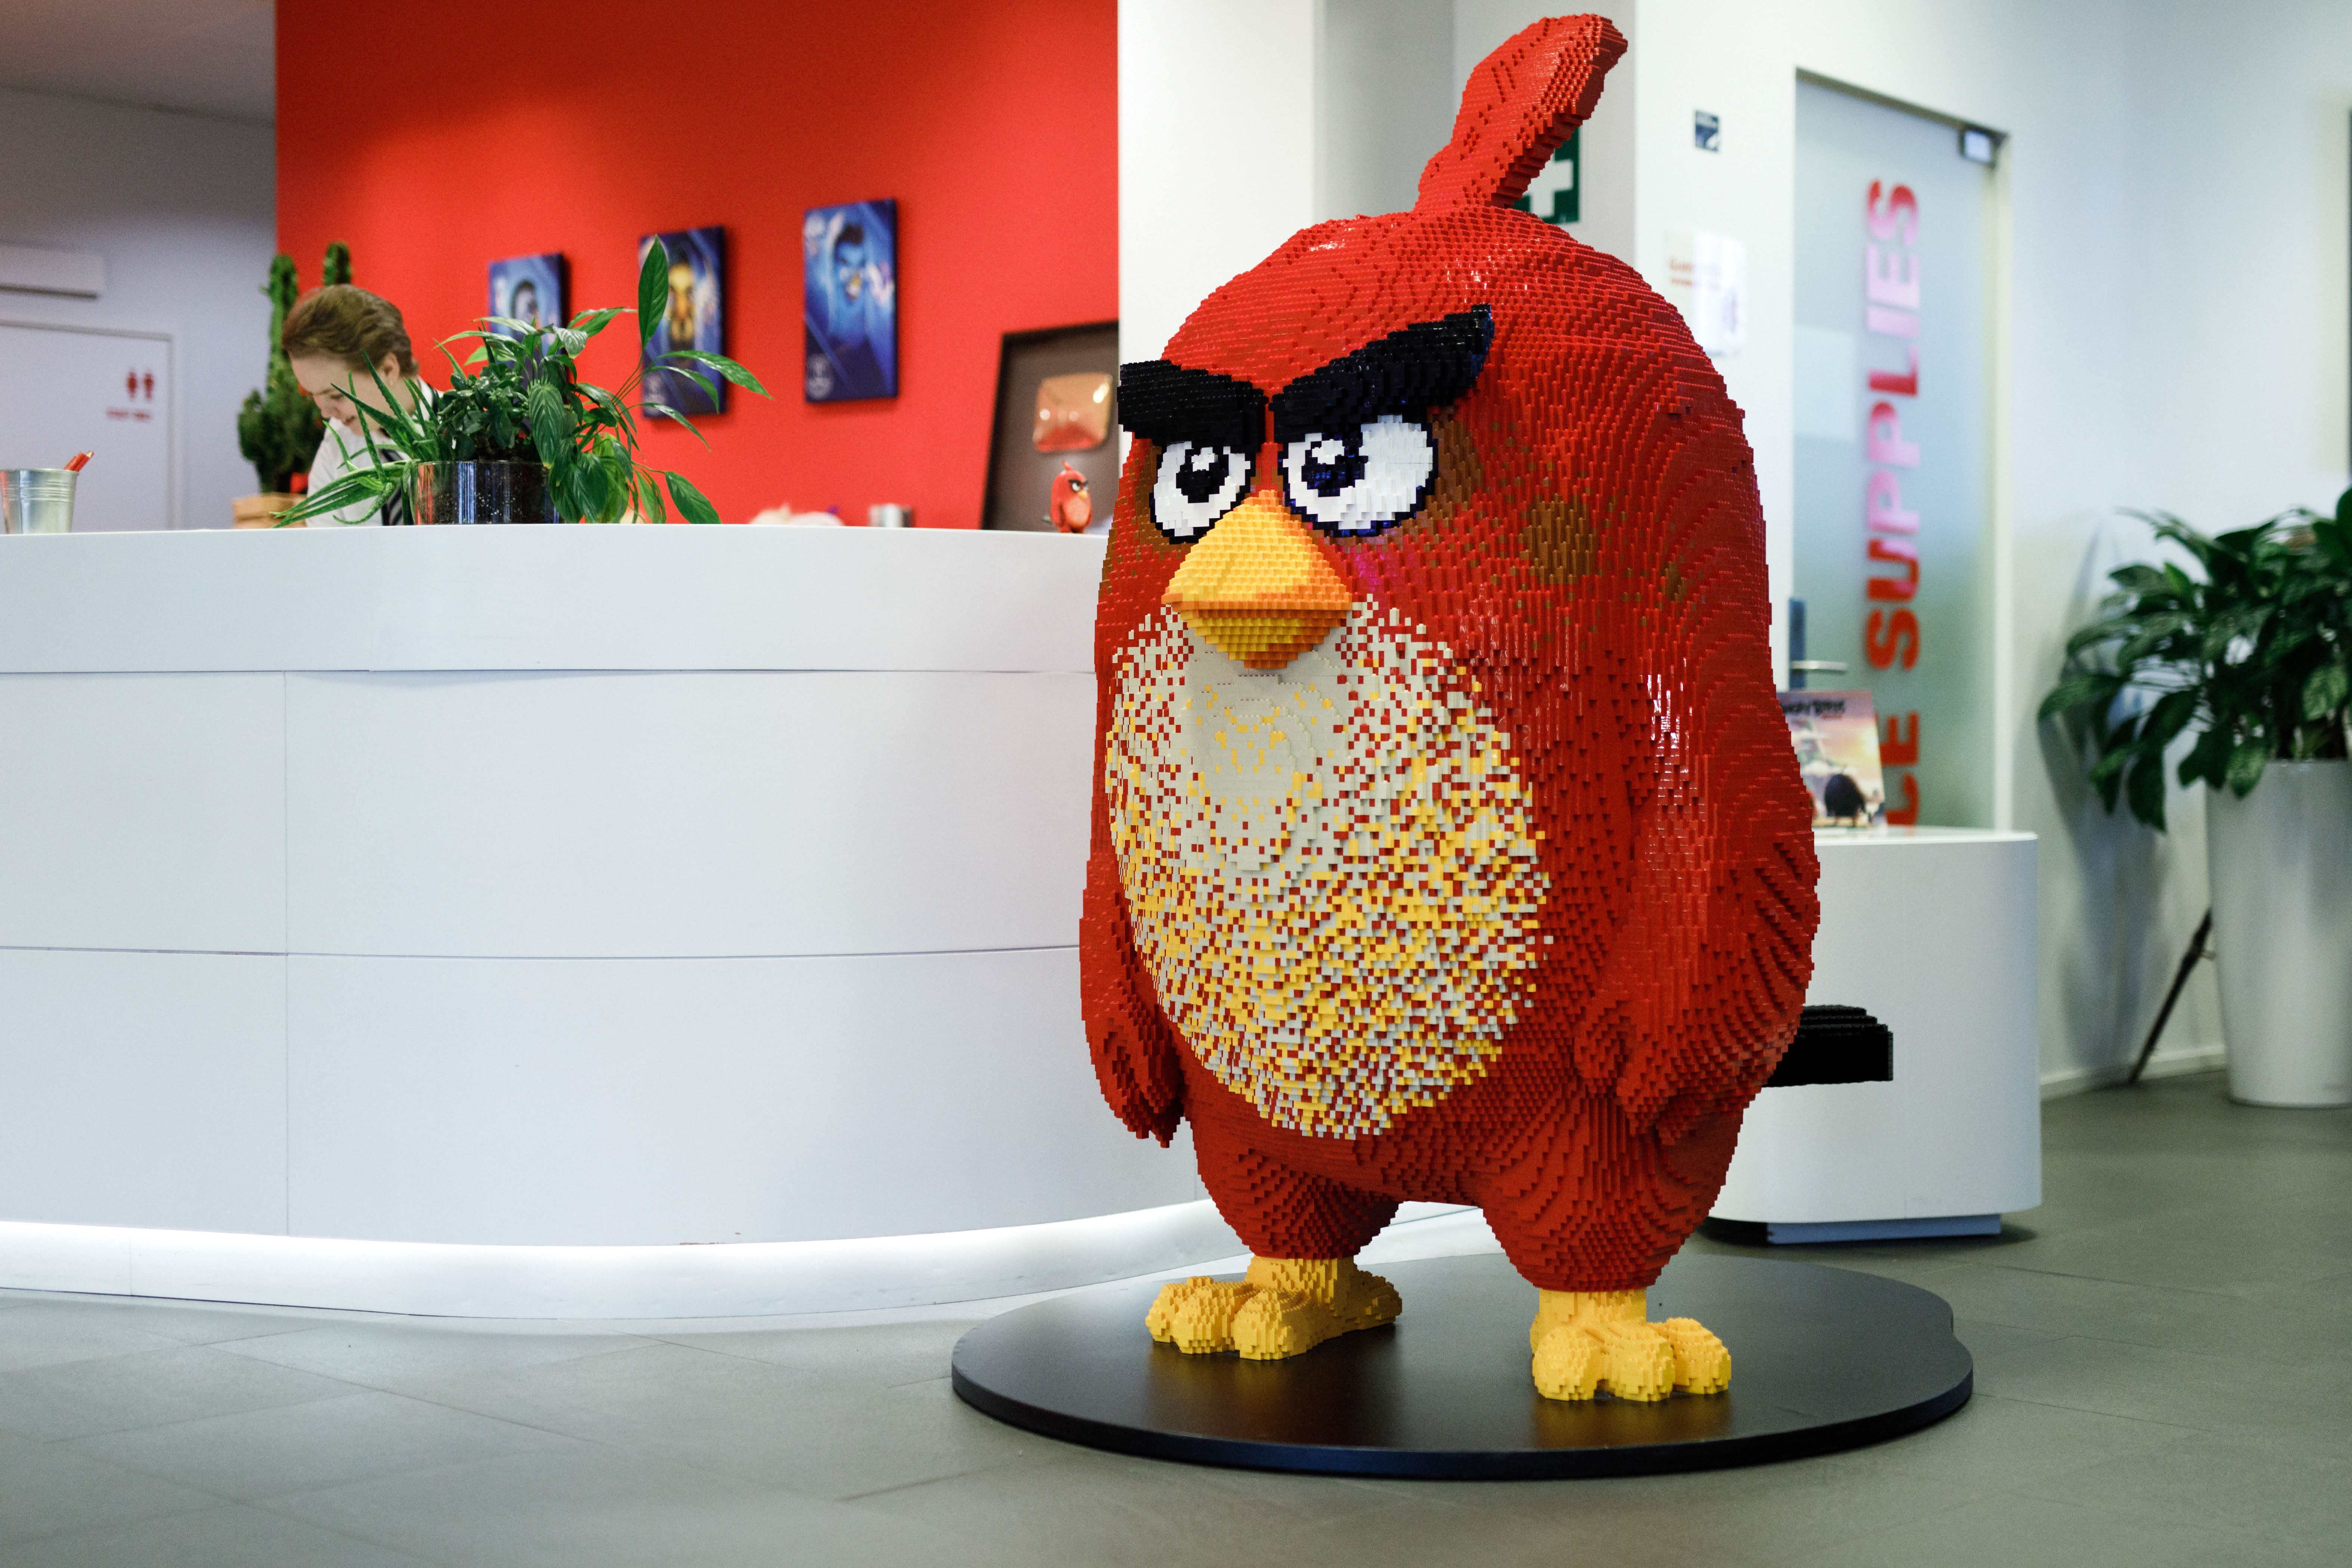 Sega to acquire Angry Birds maker Rovio for $776 million